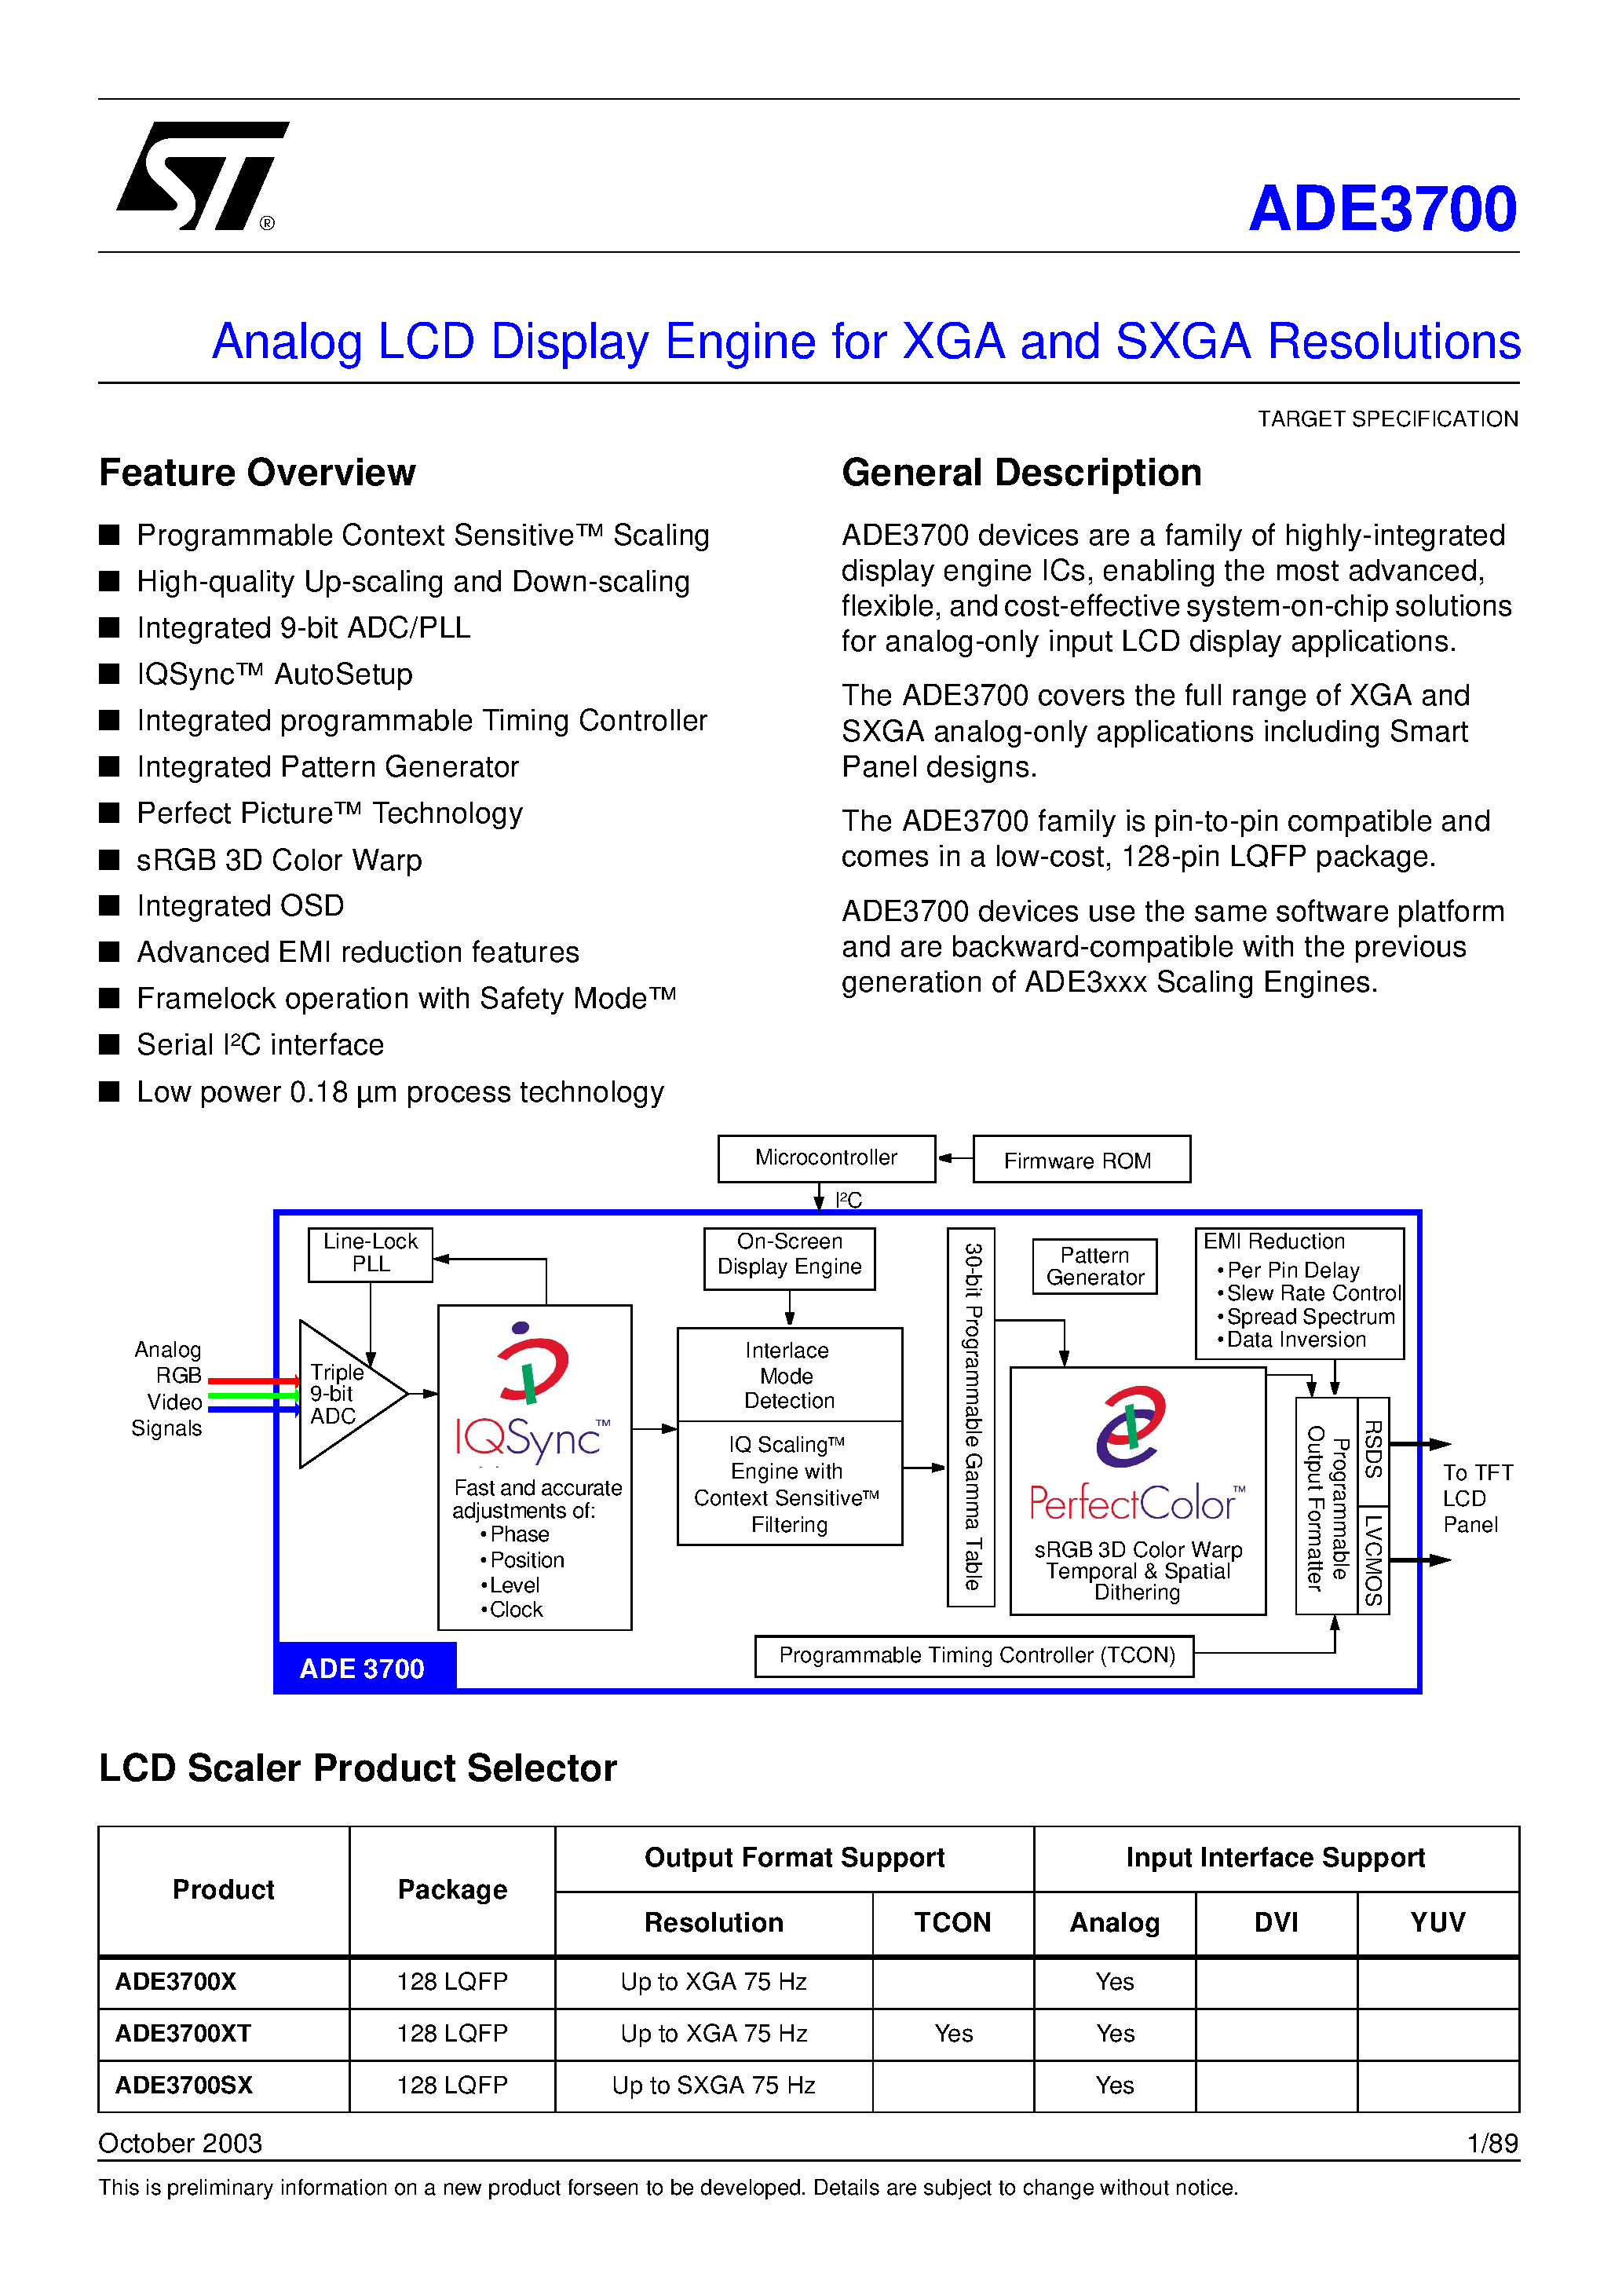 Datasheet ADE3700X - Analog LCD Display Engine for XGA and SXGA Resolutions page 1